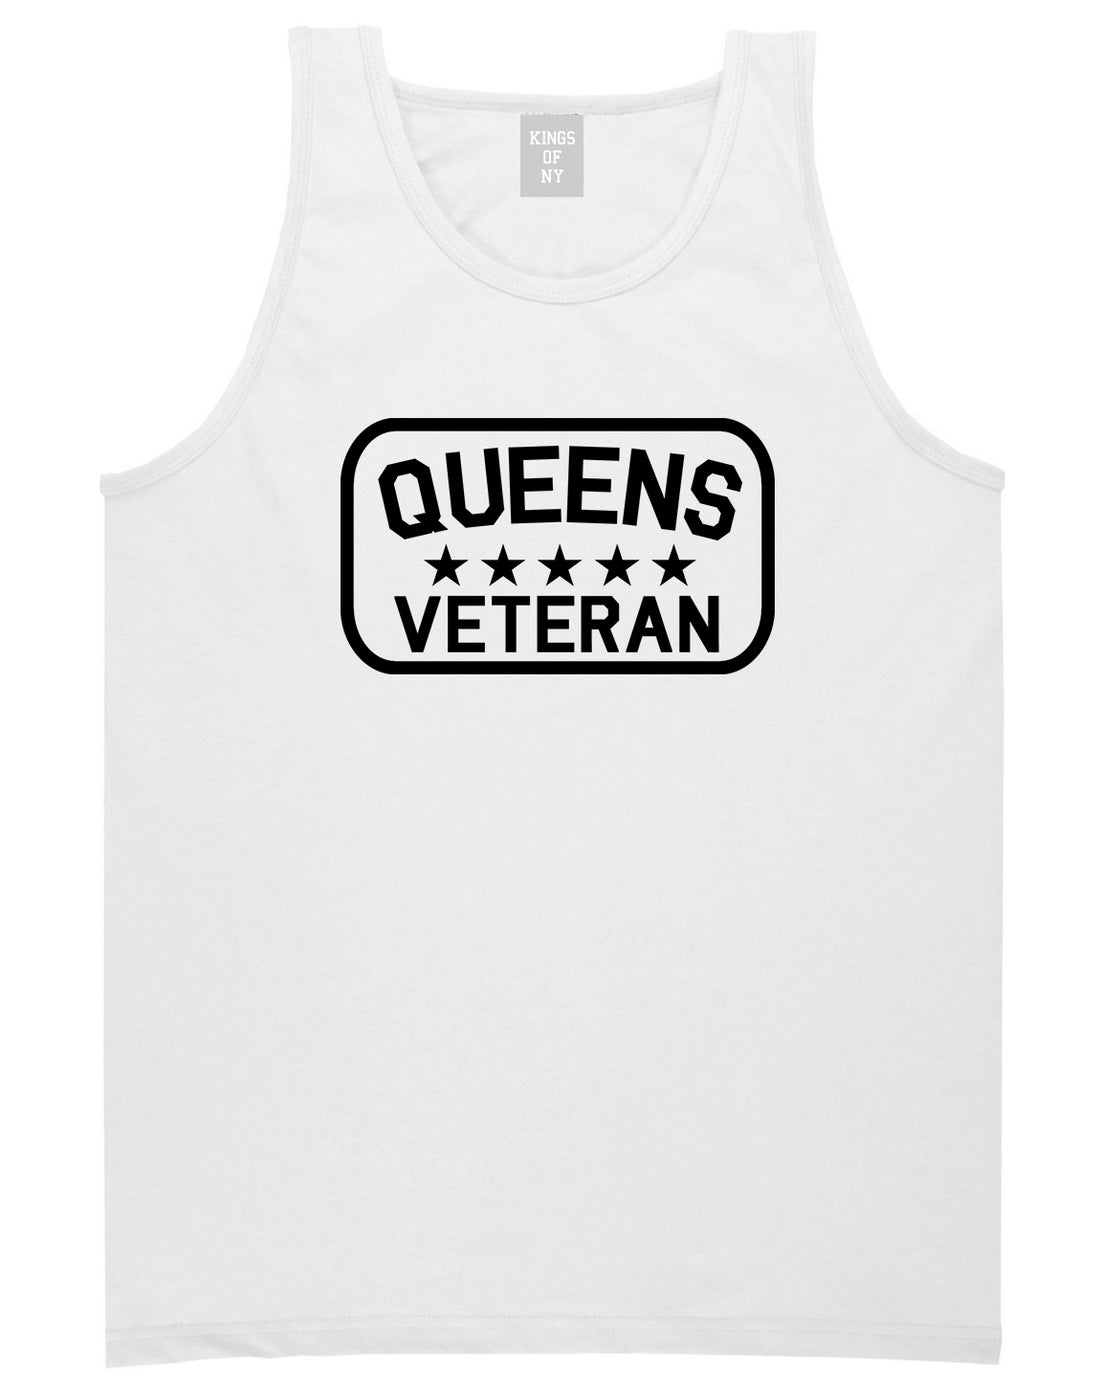 Queens Veteran Mens Tank Top Shirt White